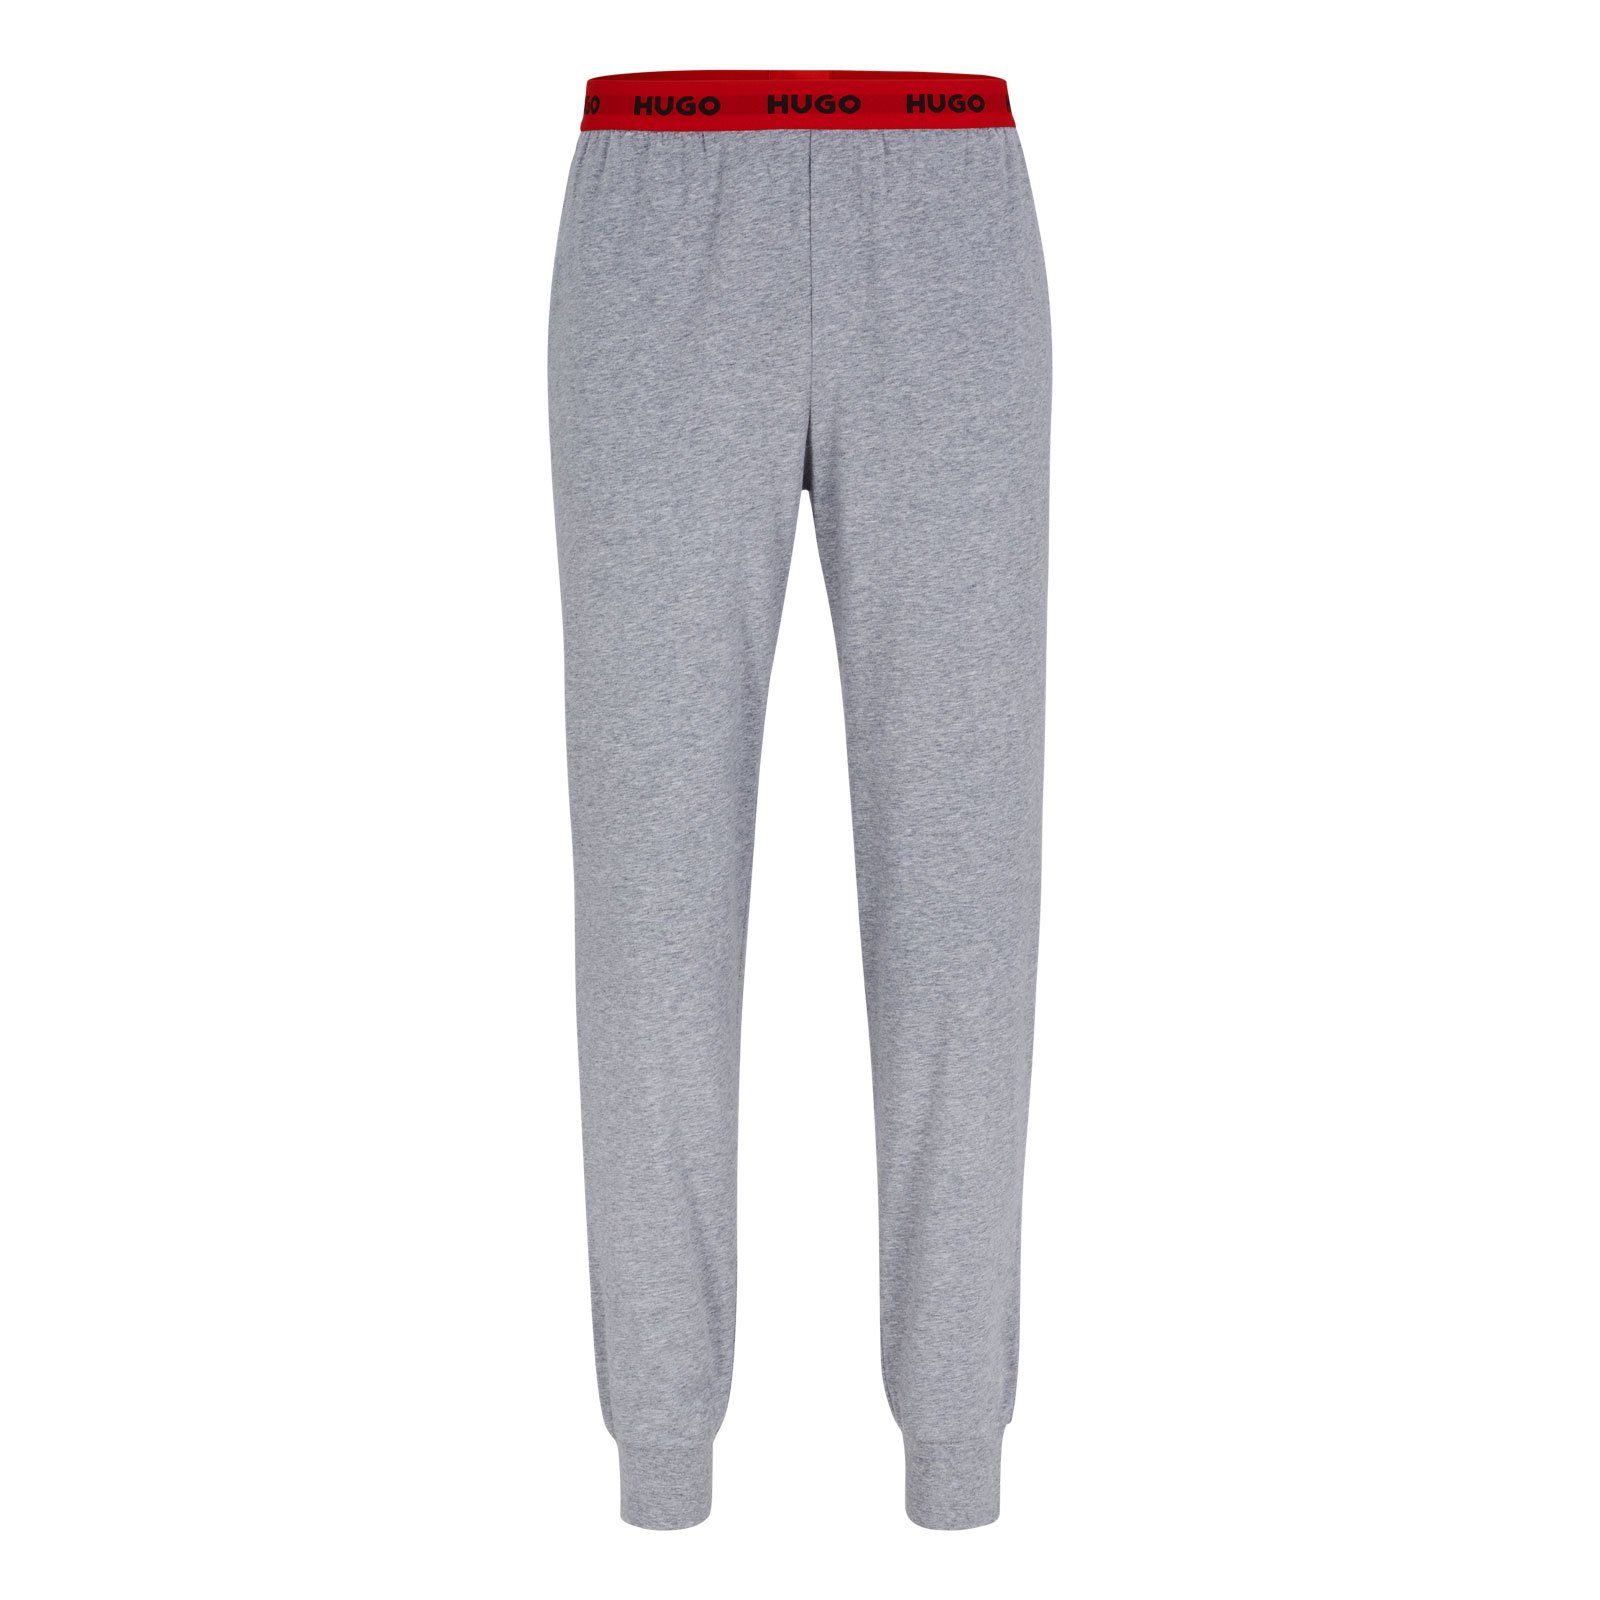 Pants sichtbarem mit Pyjamahose Elastikbund Linked HUGO 035 medium grey